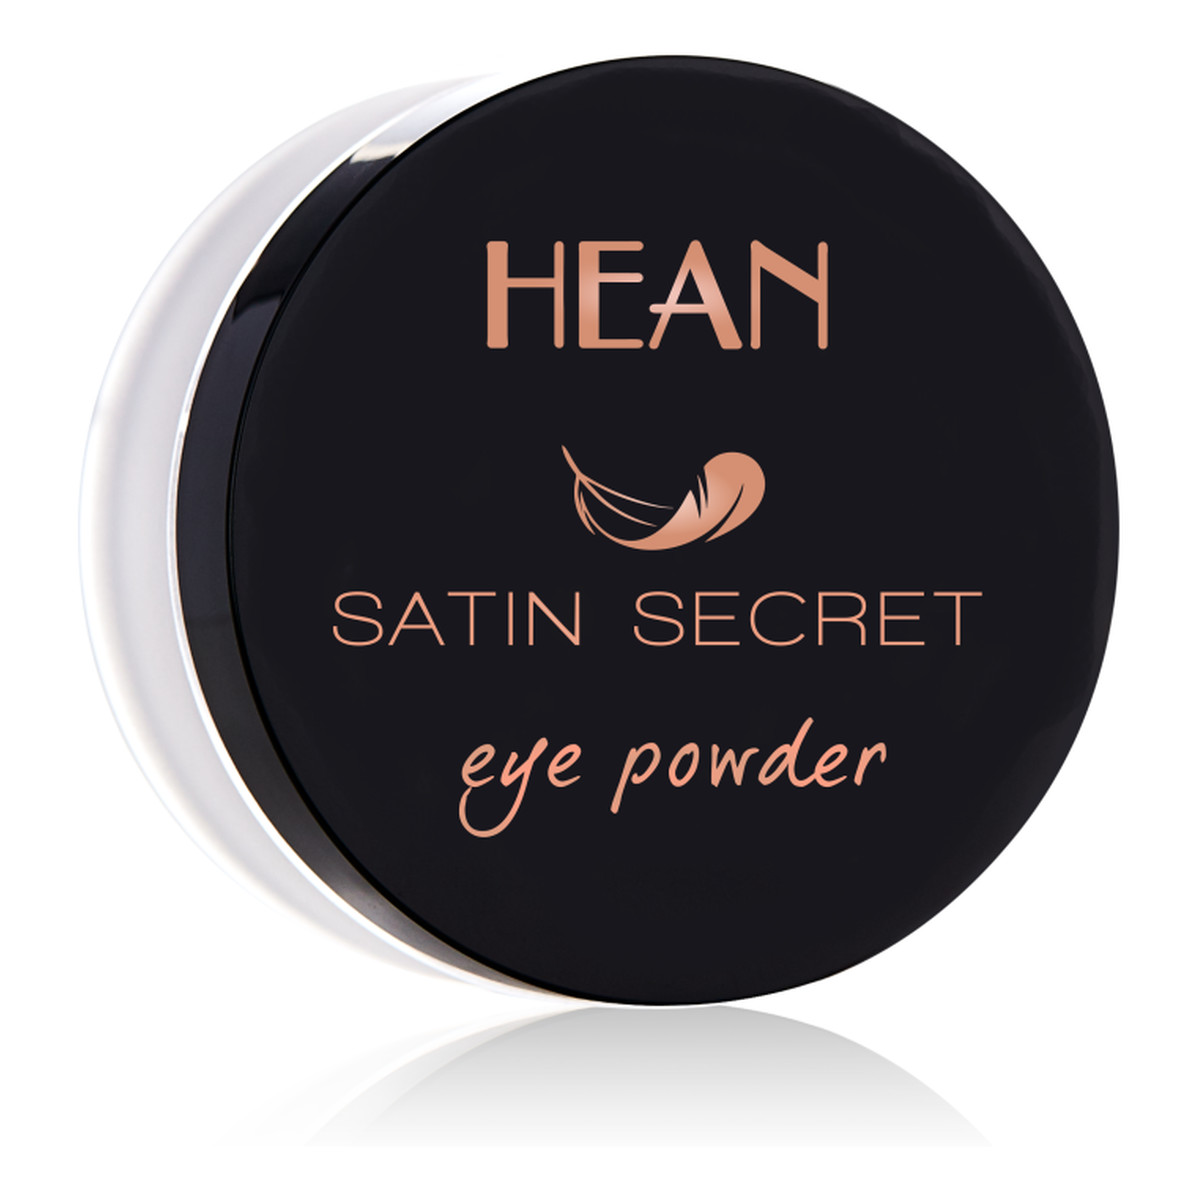 Hean Satin Secret Eye Powder Puder pod oczy 5g